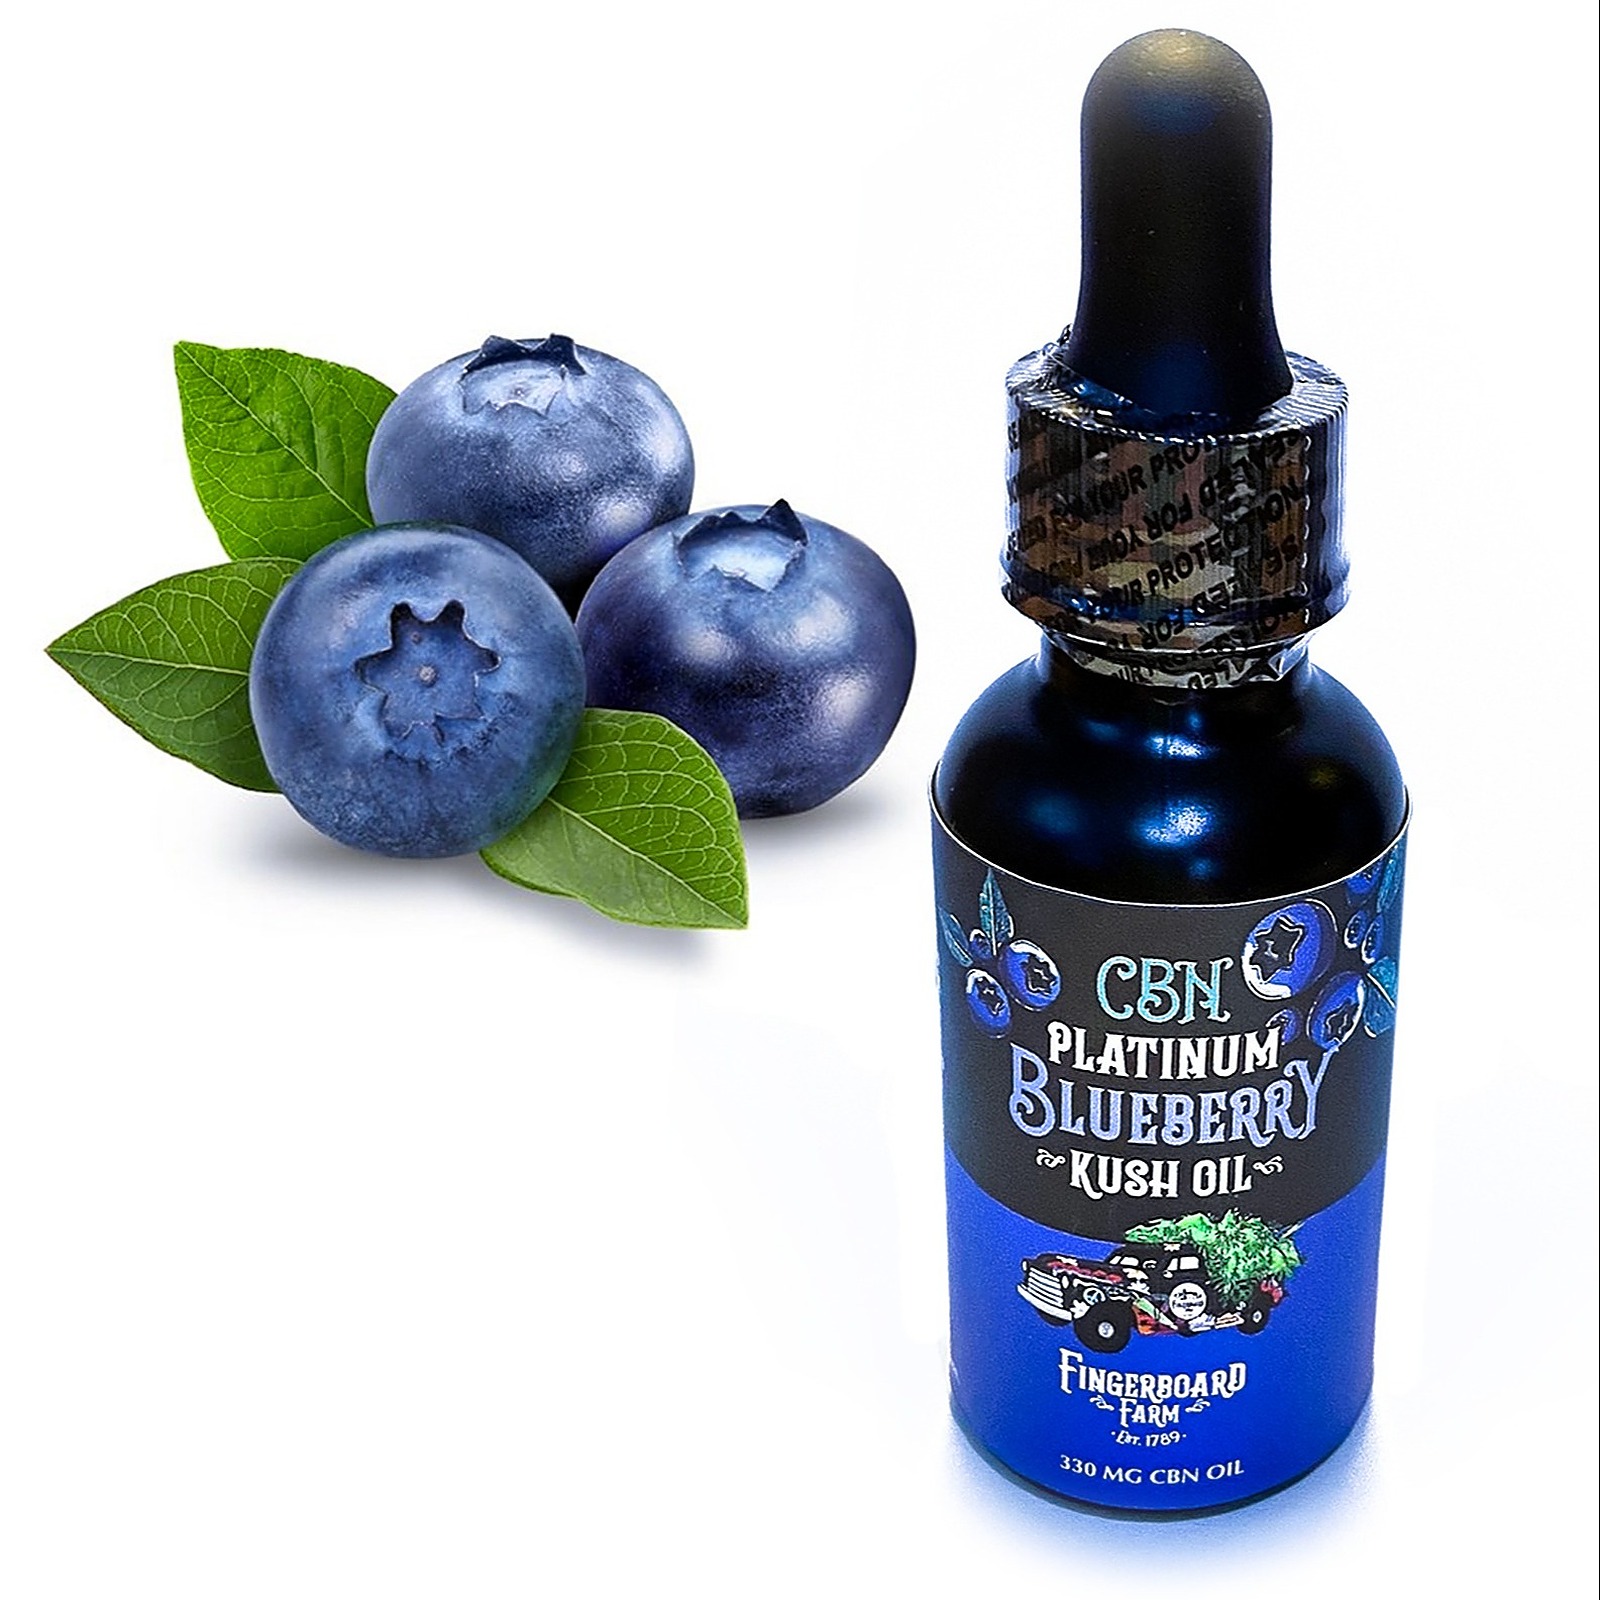  CBN Platinum Blueberry Kush Oil - 330 mg